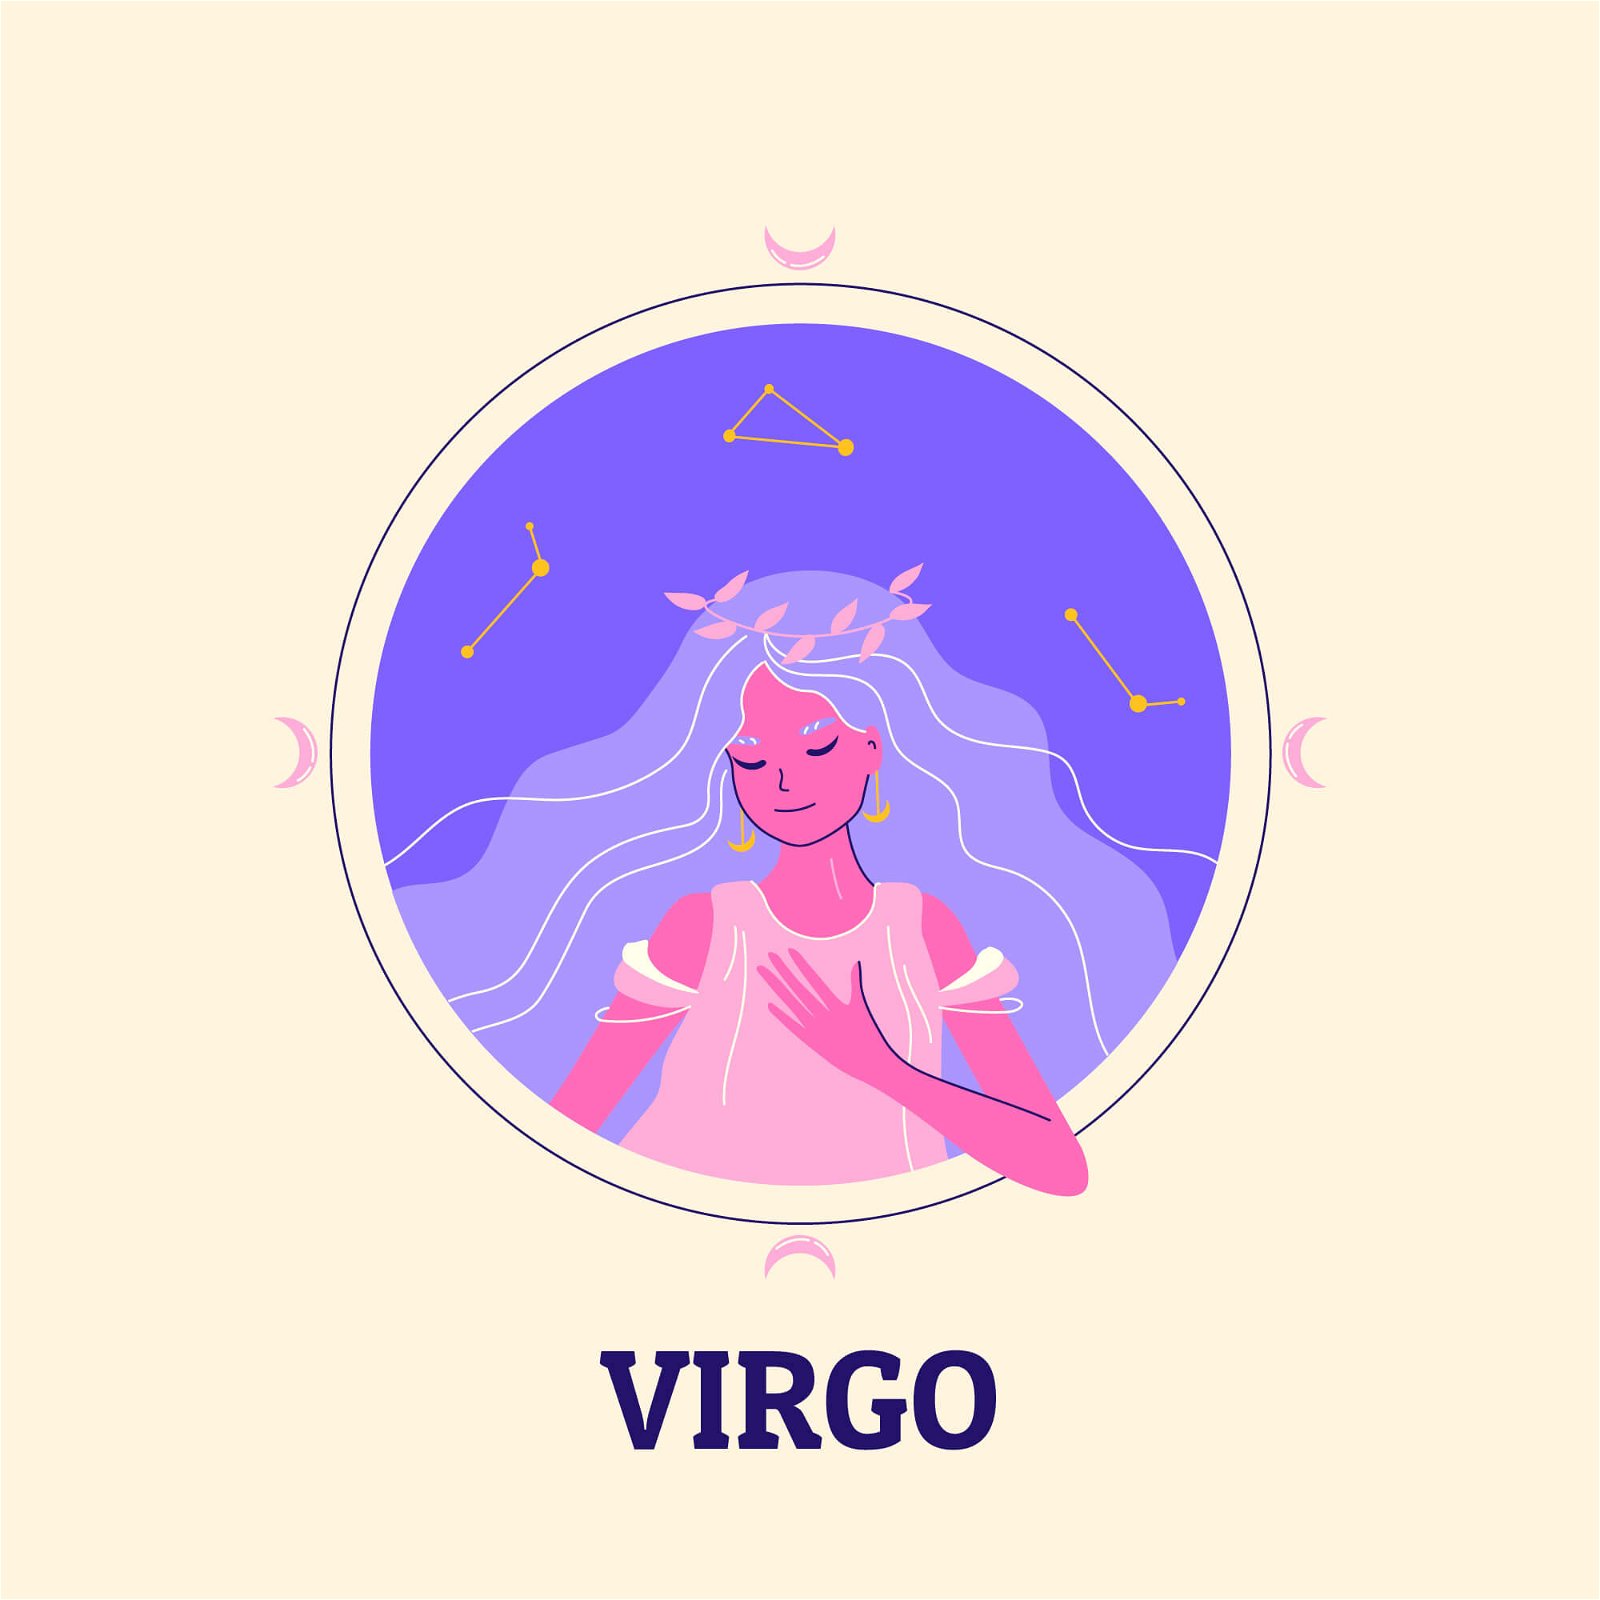 virgo image